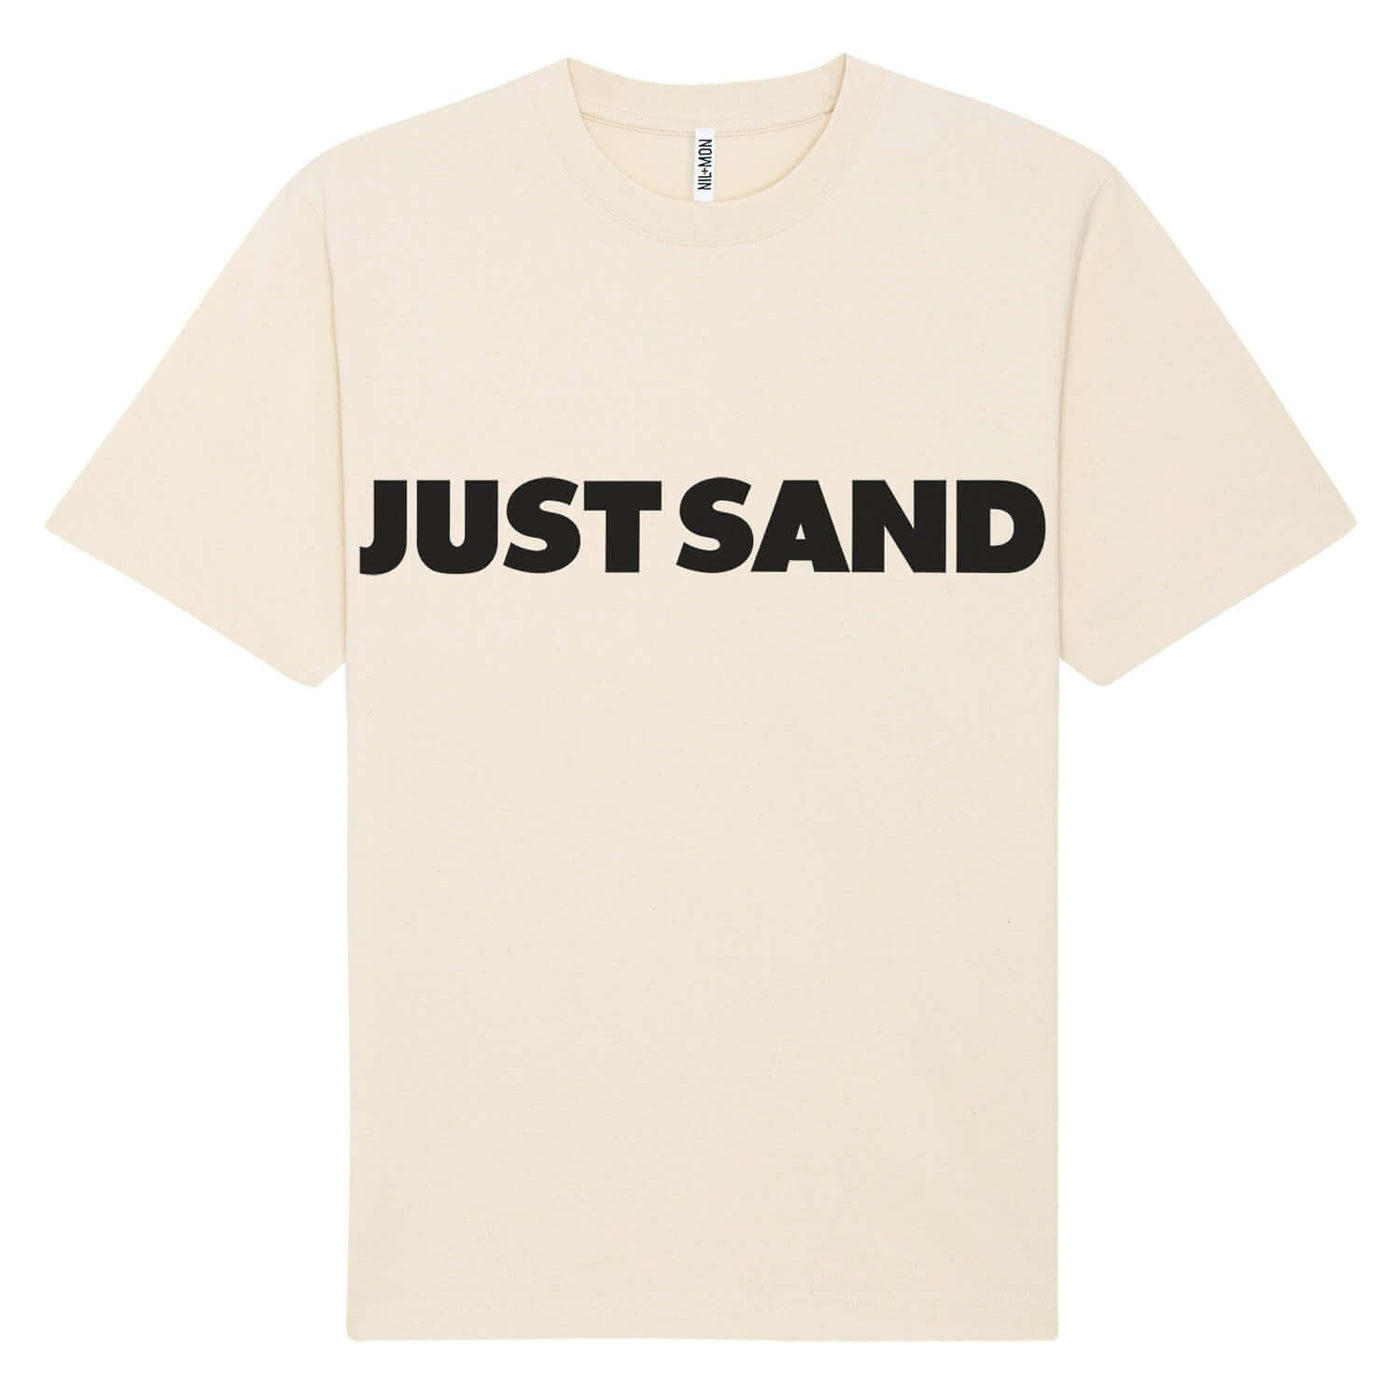 XXL Beach Shirt "Just Sand" - creme